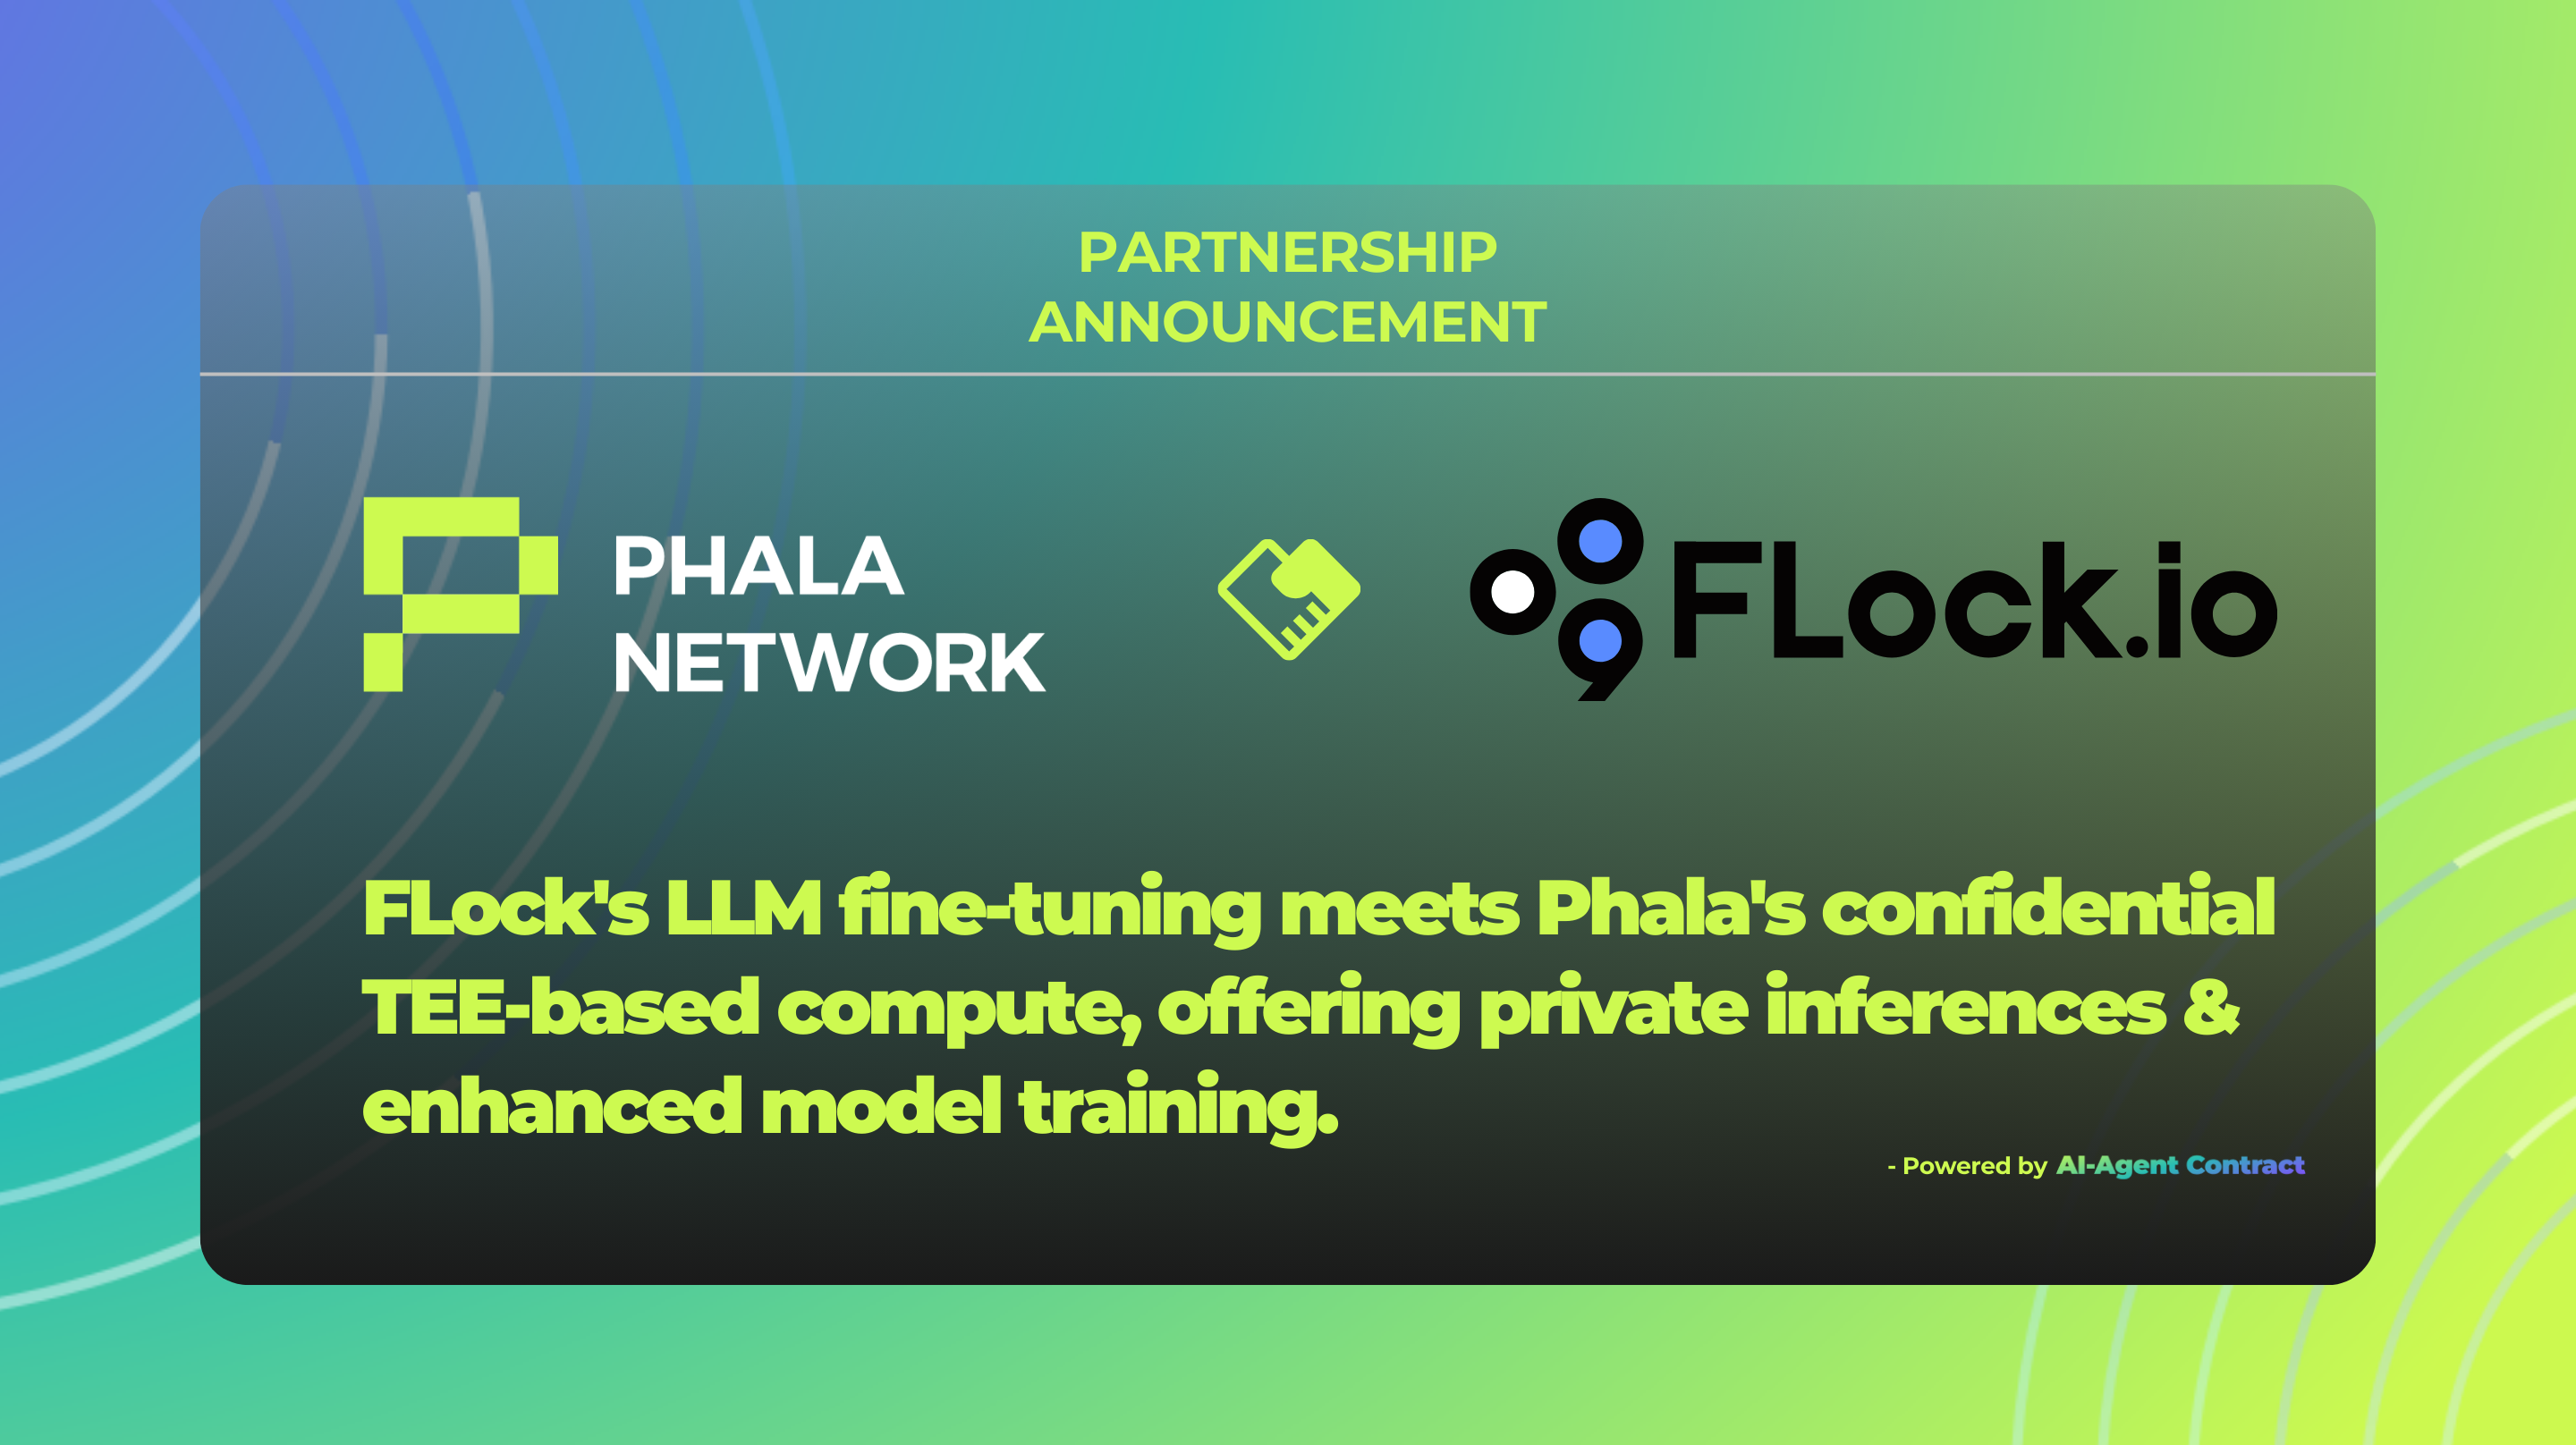 Partnership Announcement Phala Network & FLock.io